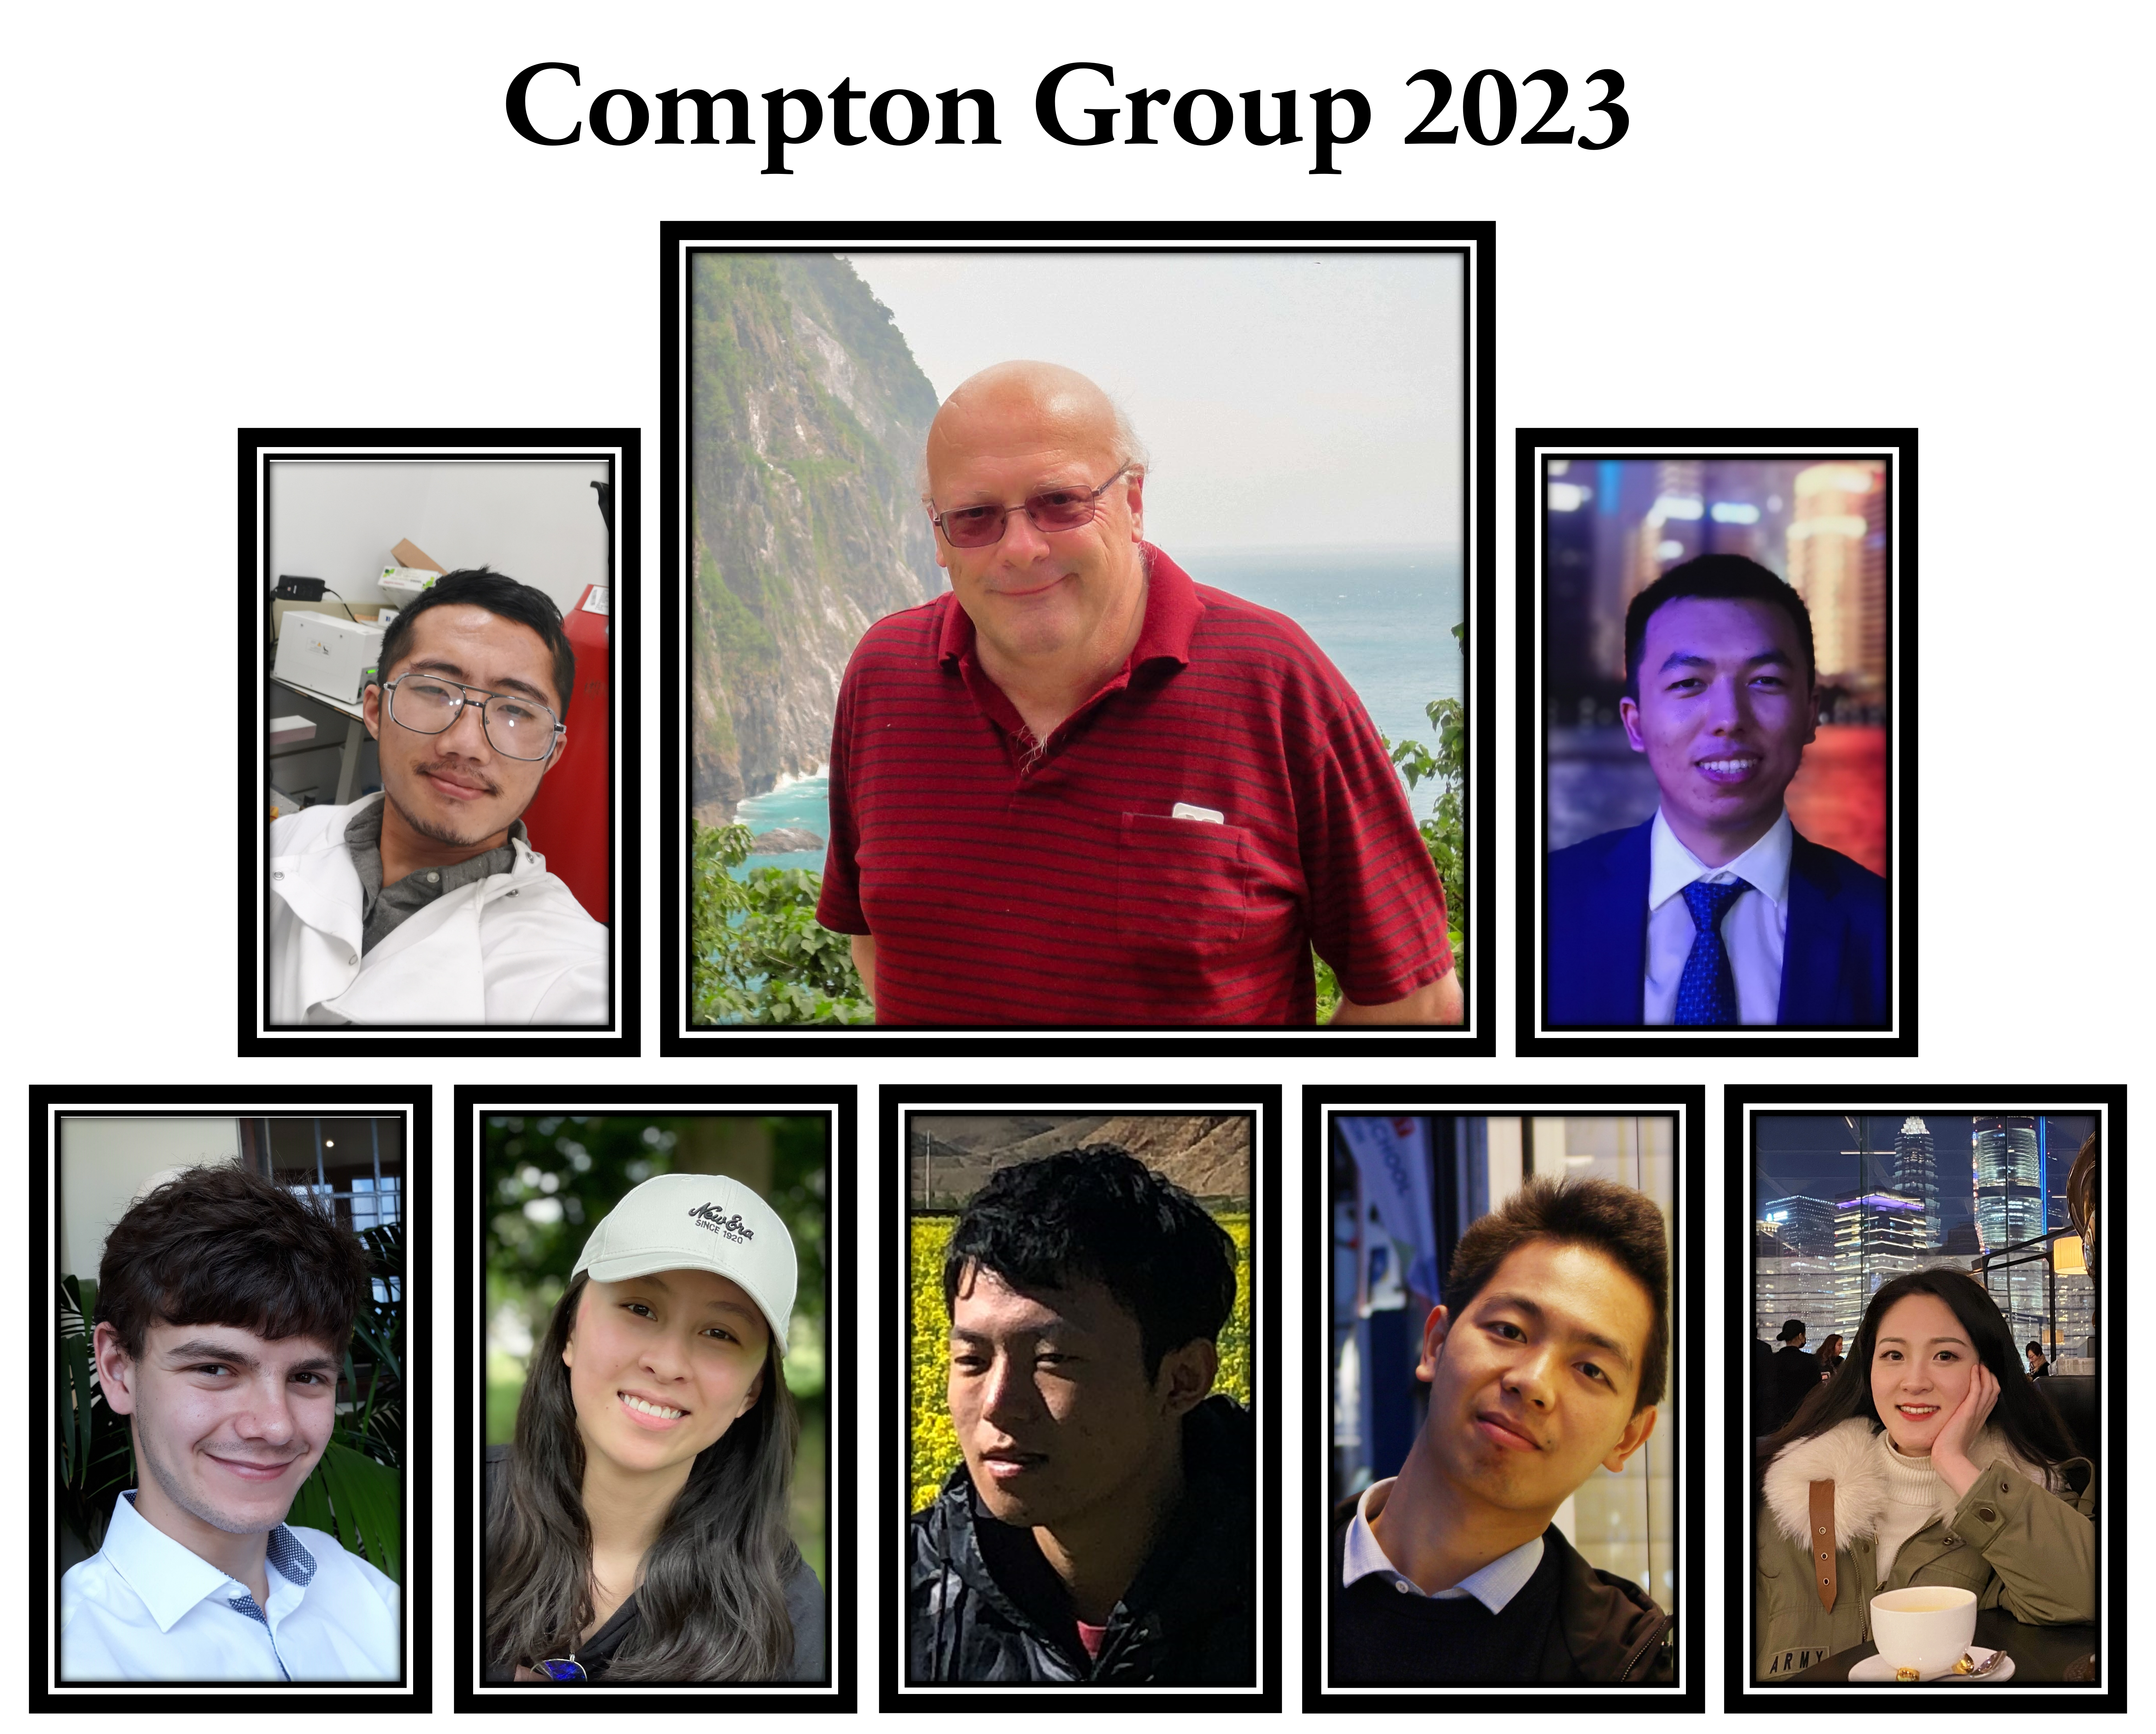 The Compton Group